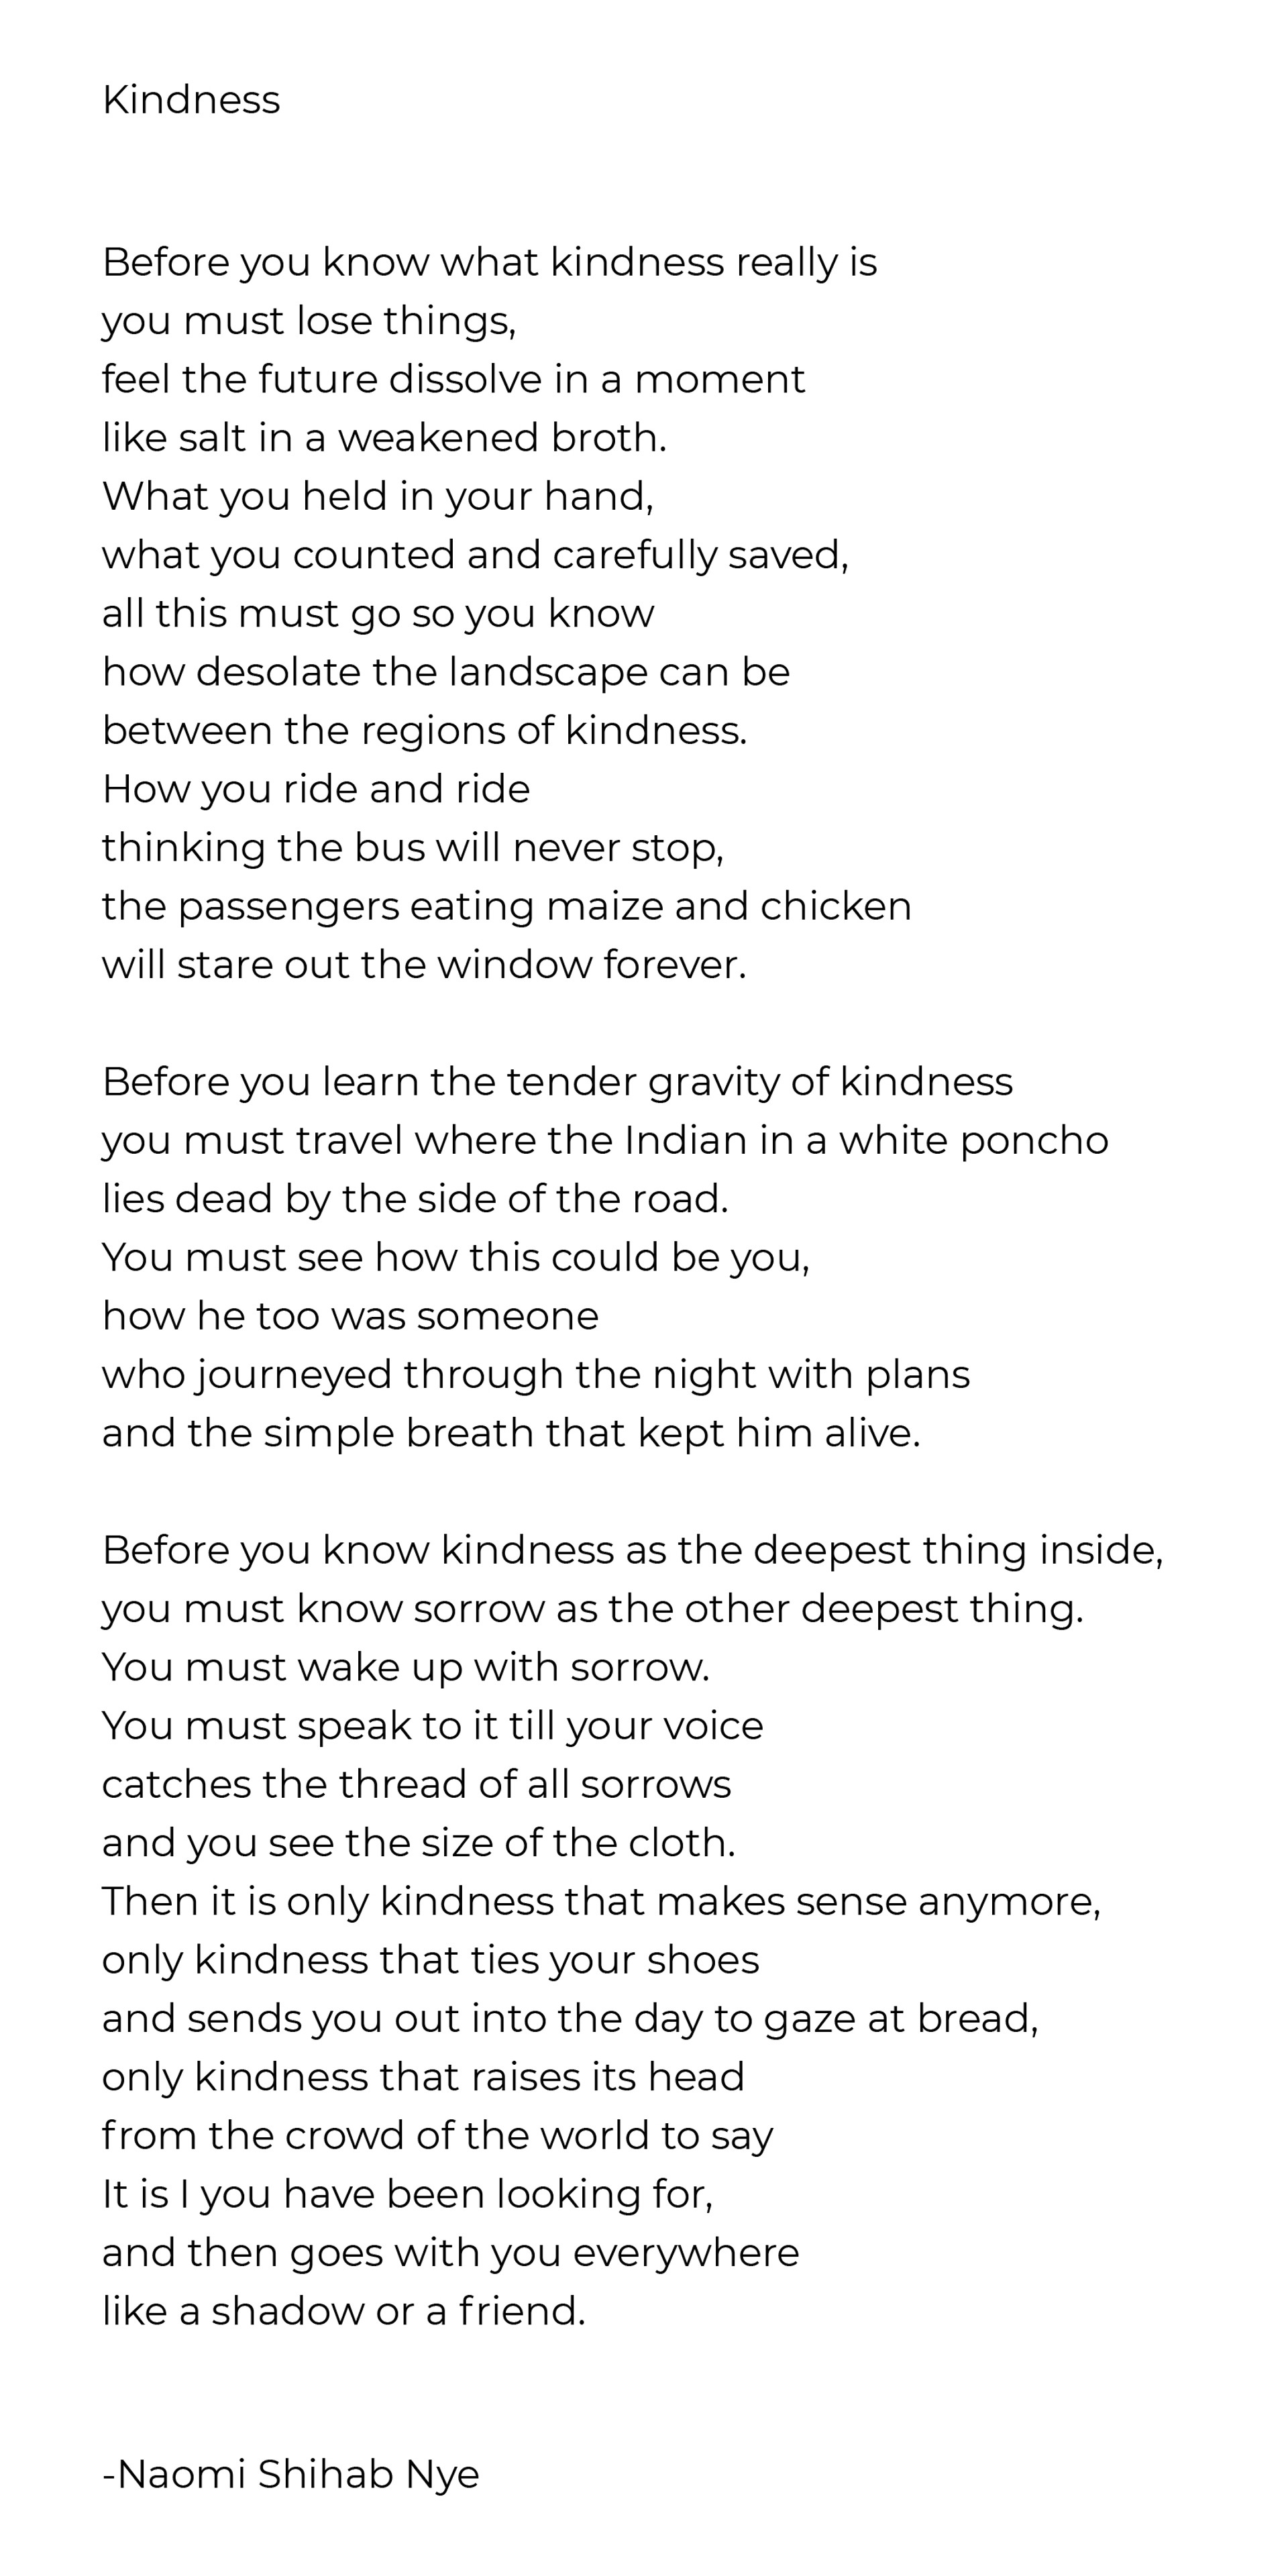 Kindness by Naomi Shihab Nye